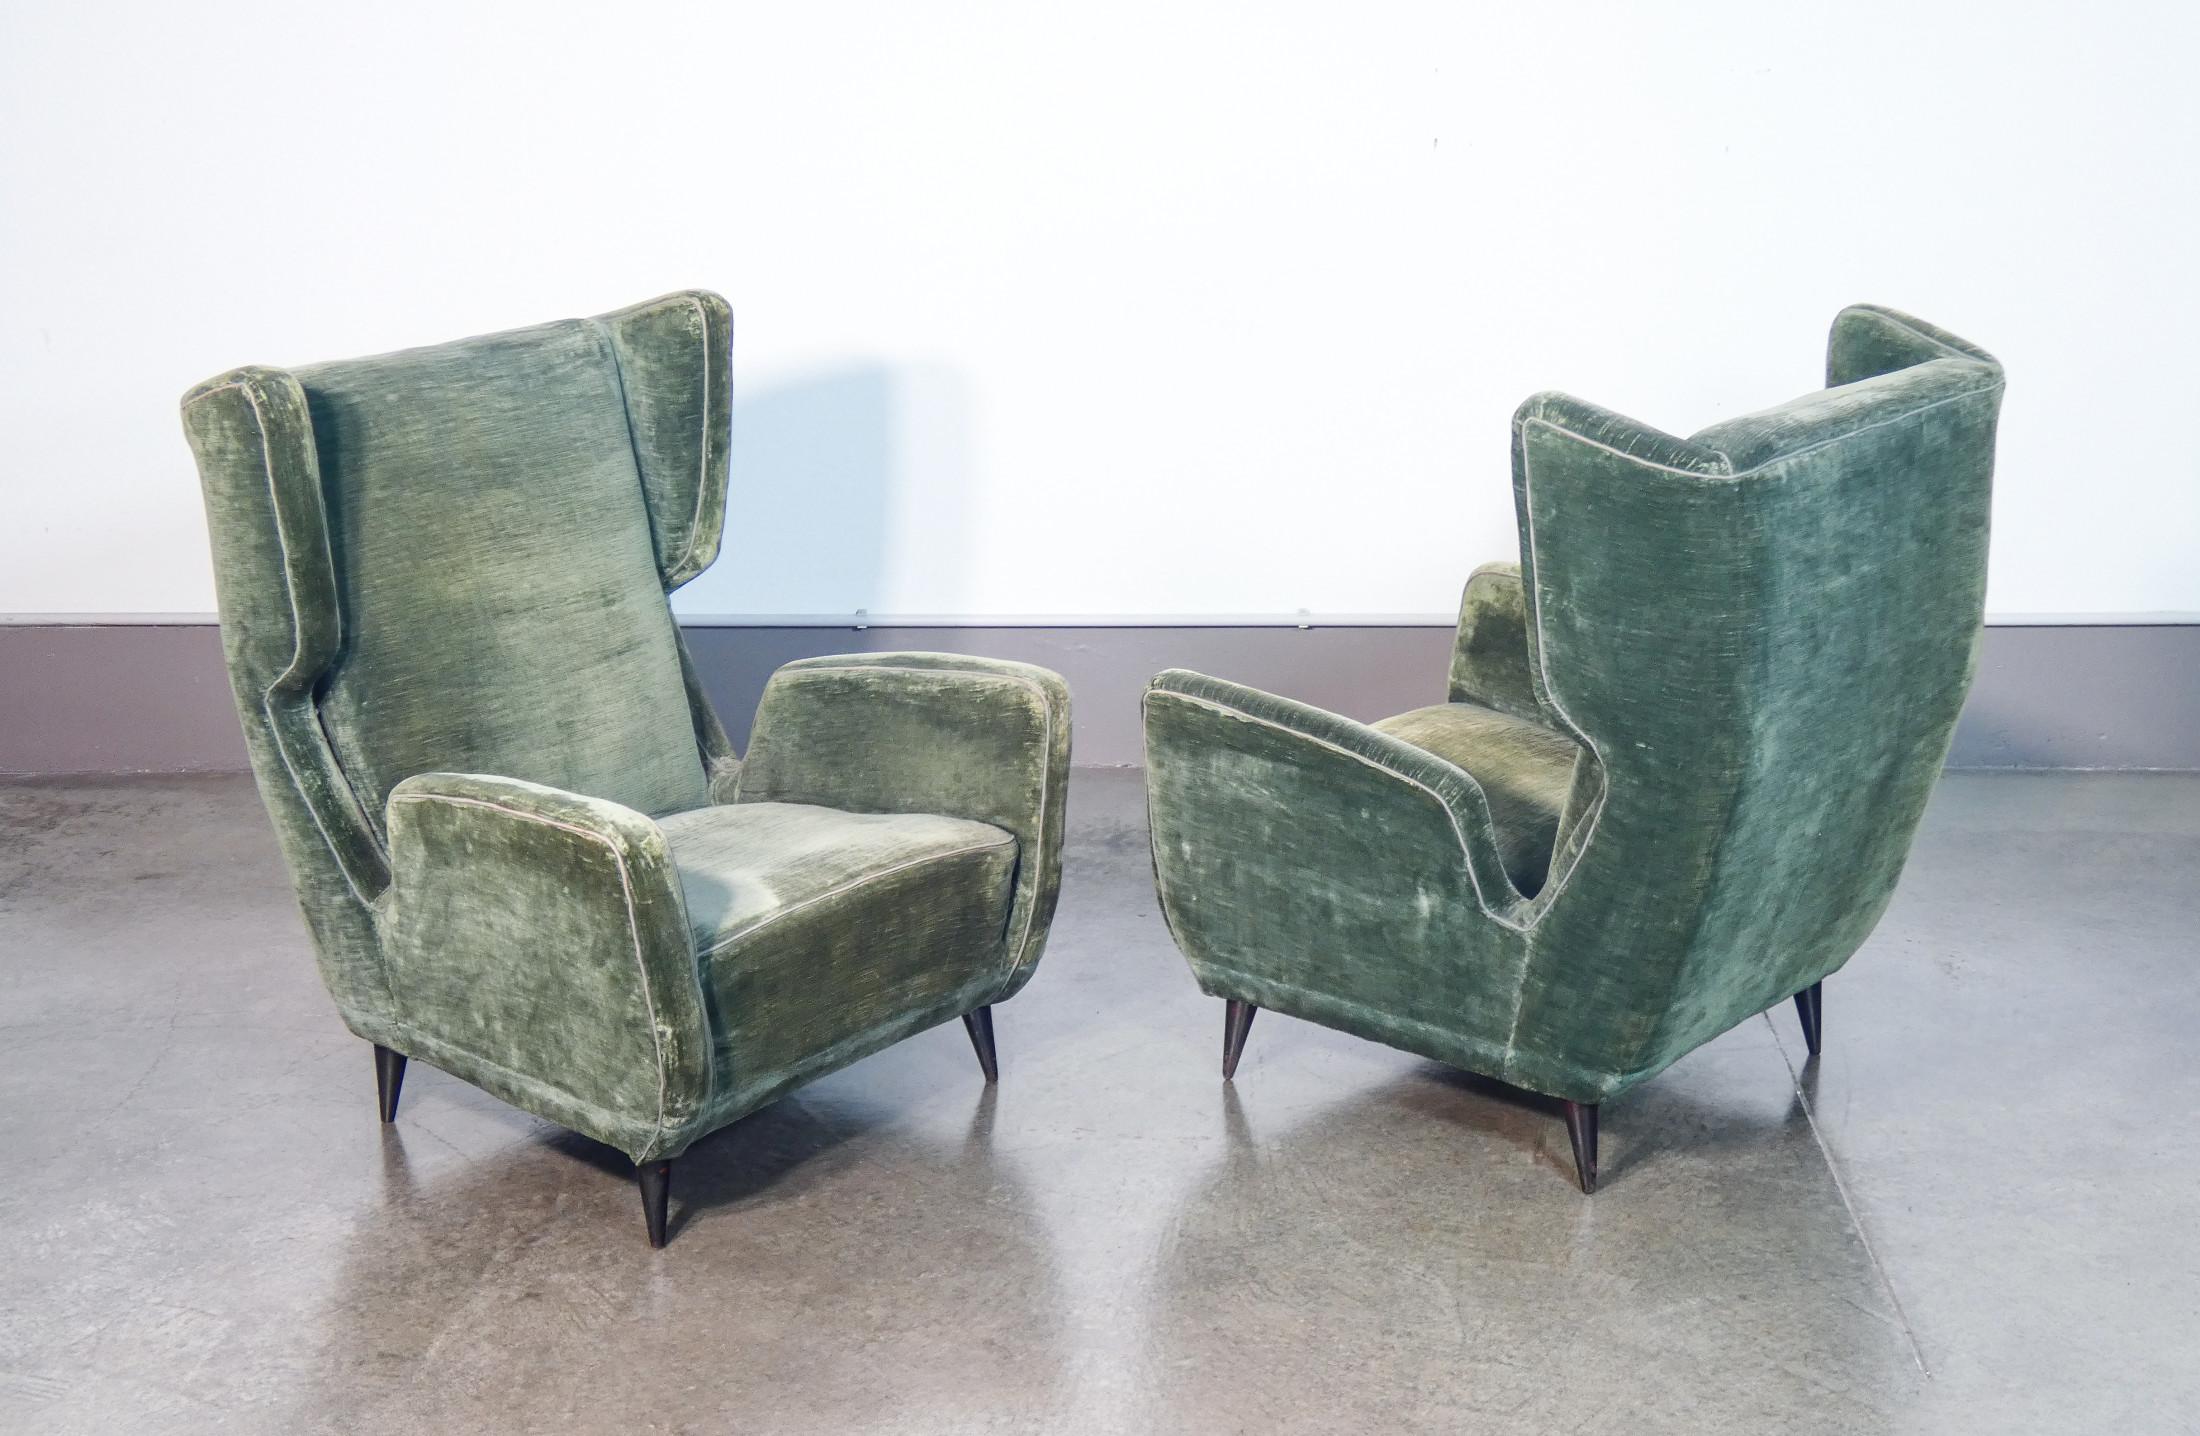 Pair of armchairs
attributed to the hand of
Julius MINOLETTI
& Giò PONTI.

ORIGIN
Italy

PERIOD
1950s

AUTHOR
Attributed to Giulio MINOLETTI (1910-1981) & Giò PONTI (1891-1979)

DIMENSIONS
Height :  95 cm
Width: 75 cm
Depth: 81 cm
Seat: 37